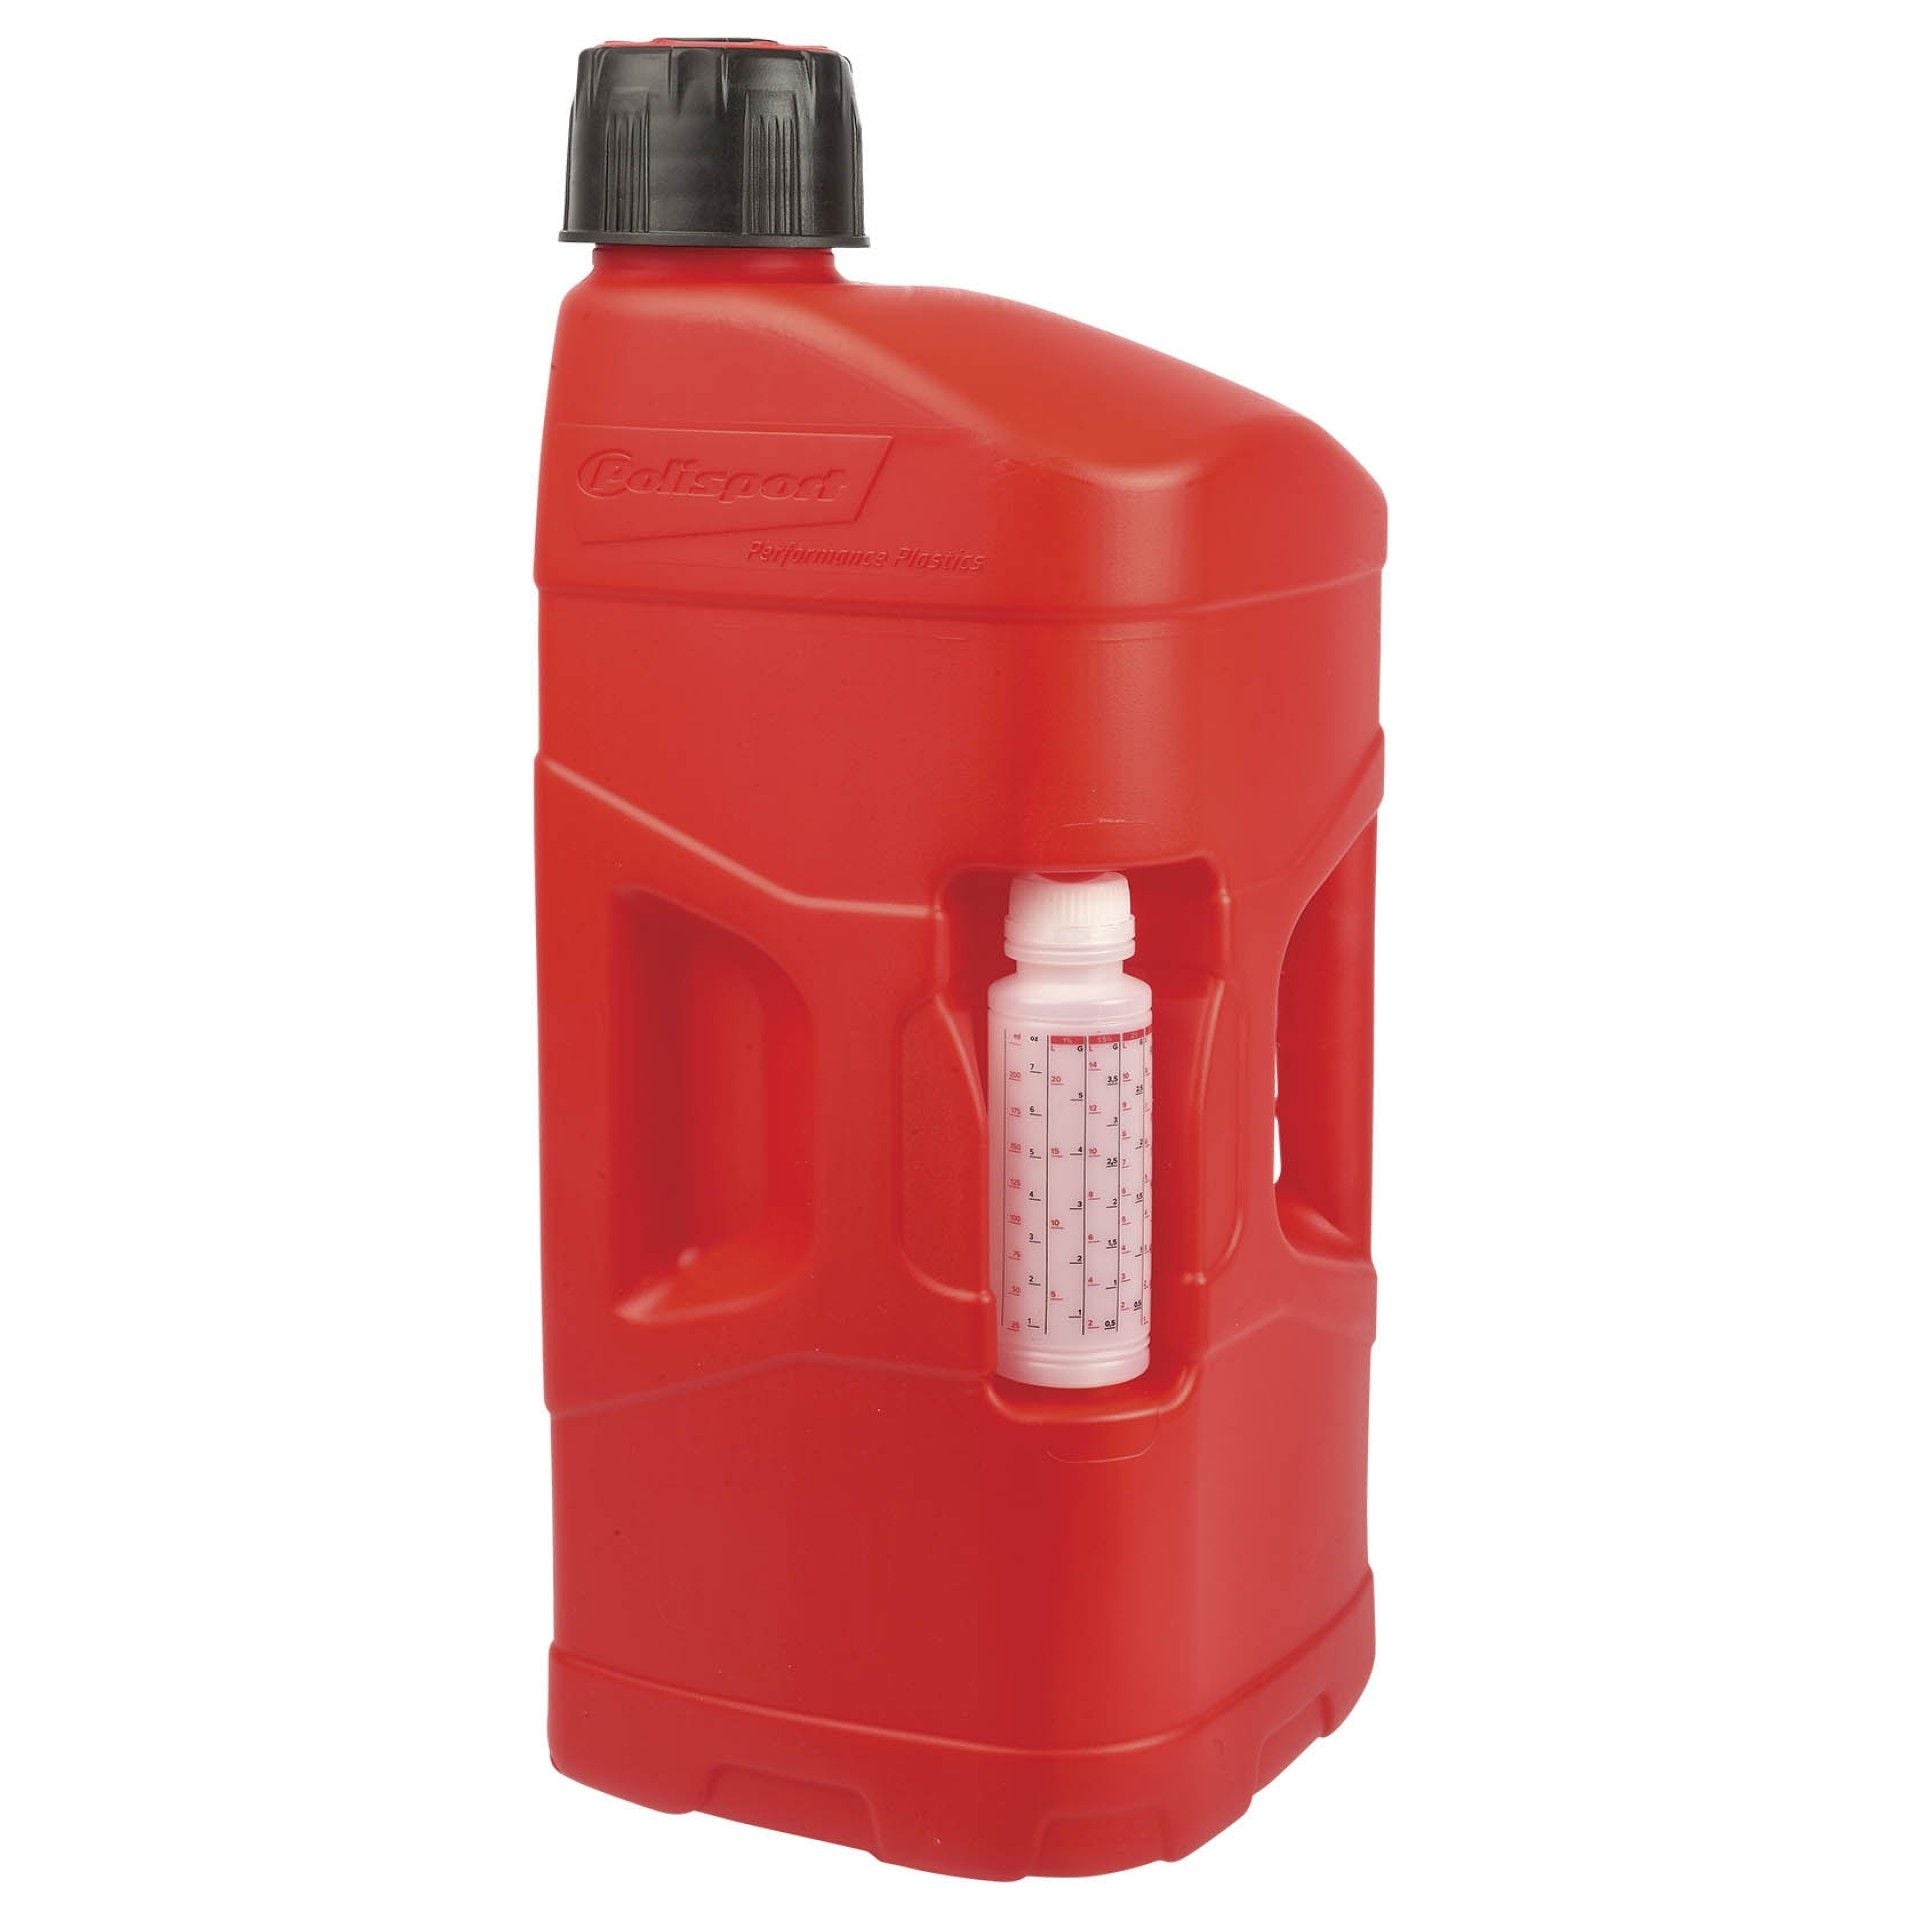 Polisport Pro-Octane 20 Litre Fuel Can with Quick Fill Cap